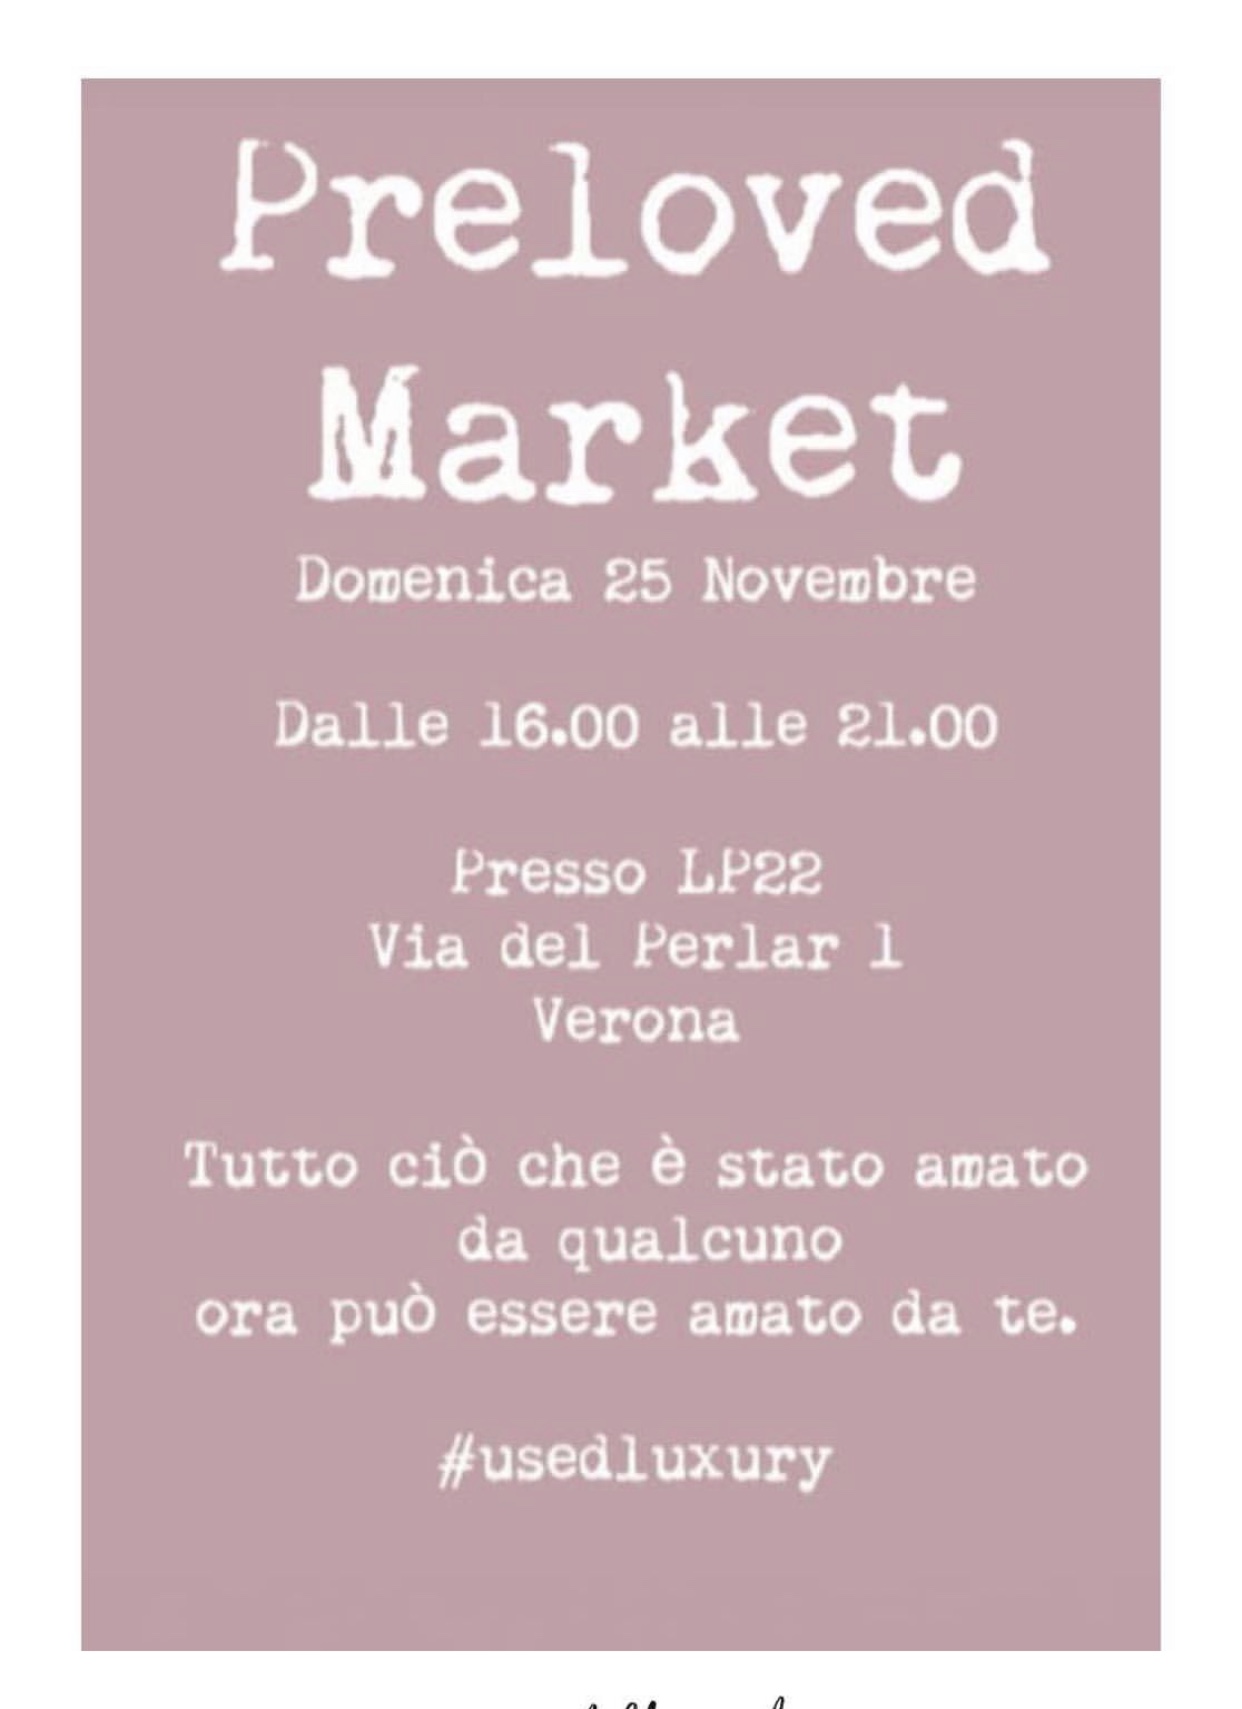 Preloved market verona